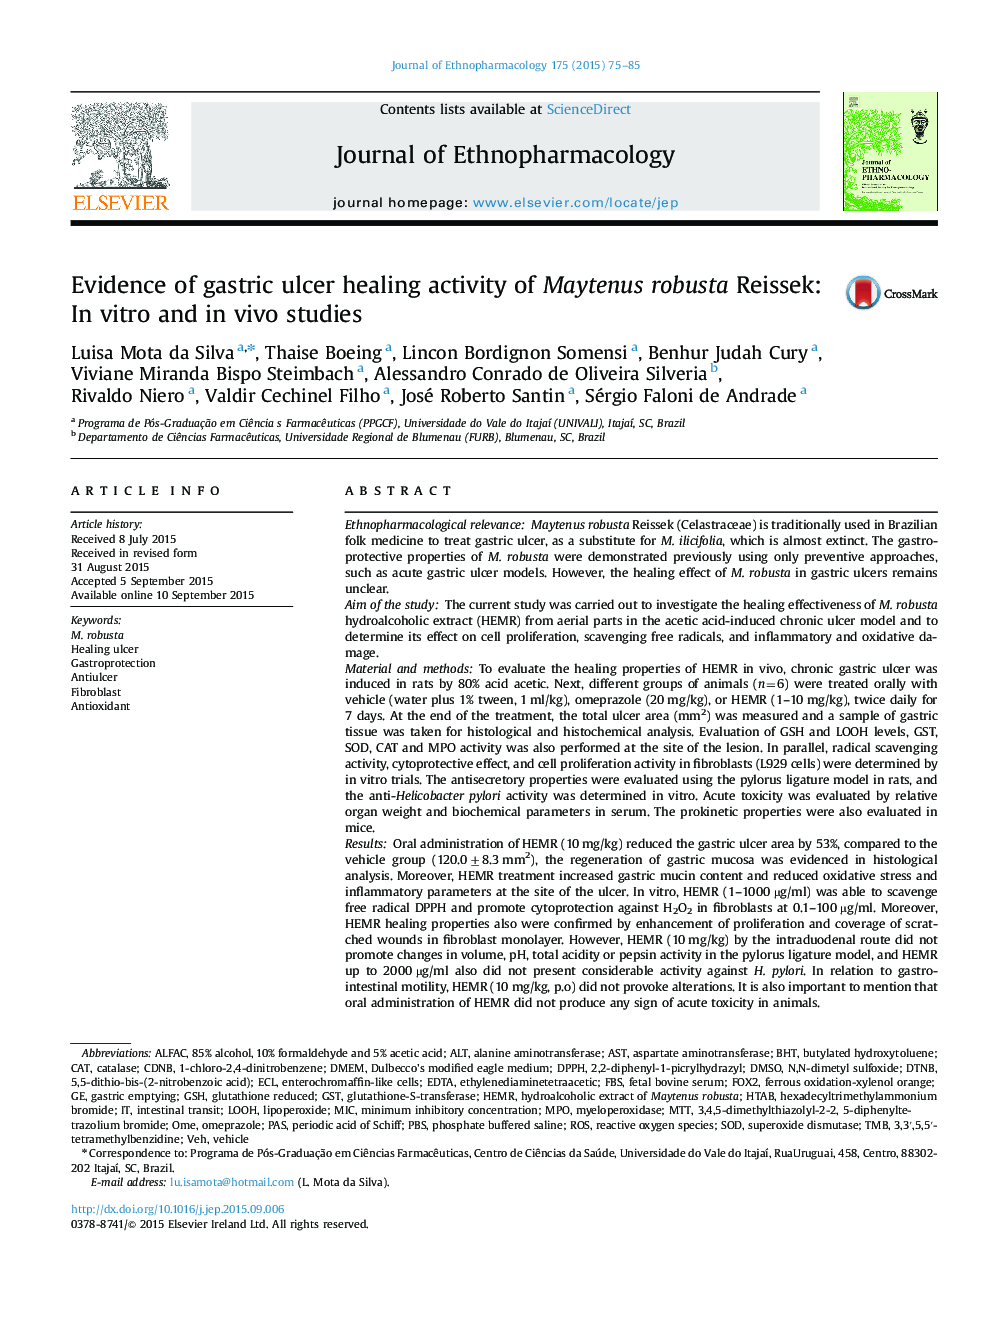 Evidence of gastric ulcer healing activity of Maytenus robusta Reissek: In vitro and in vivo studies